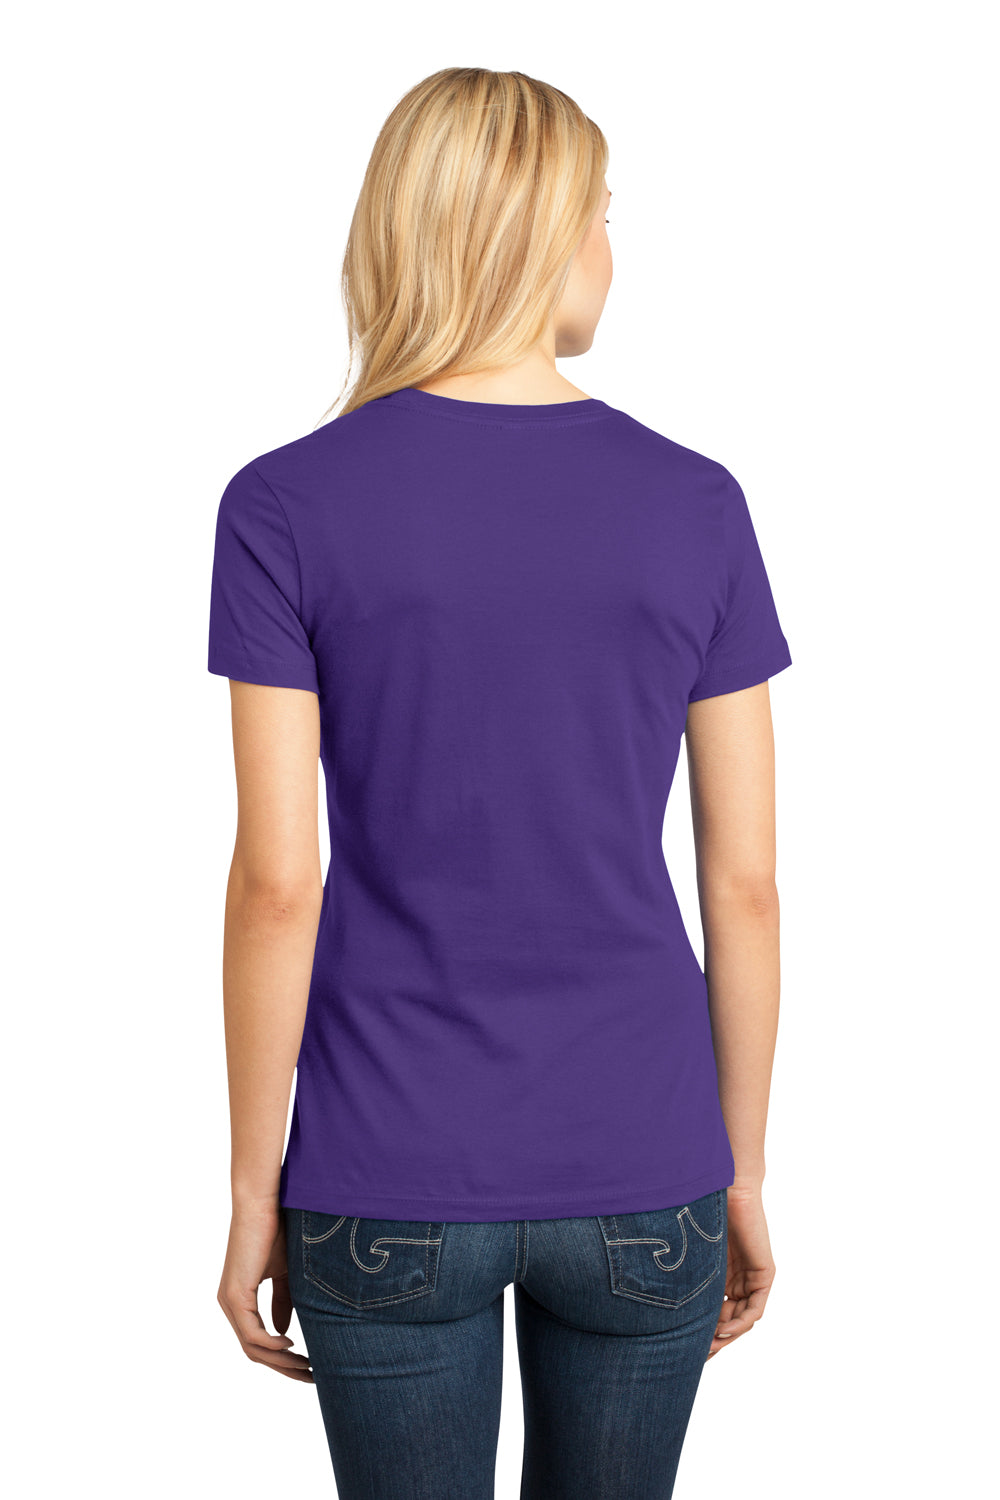 District DM104L Womens Perfect Weight Short Sleeve Crewneck T-Shirt Purple Back